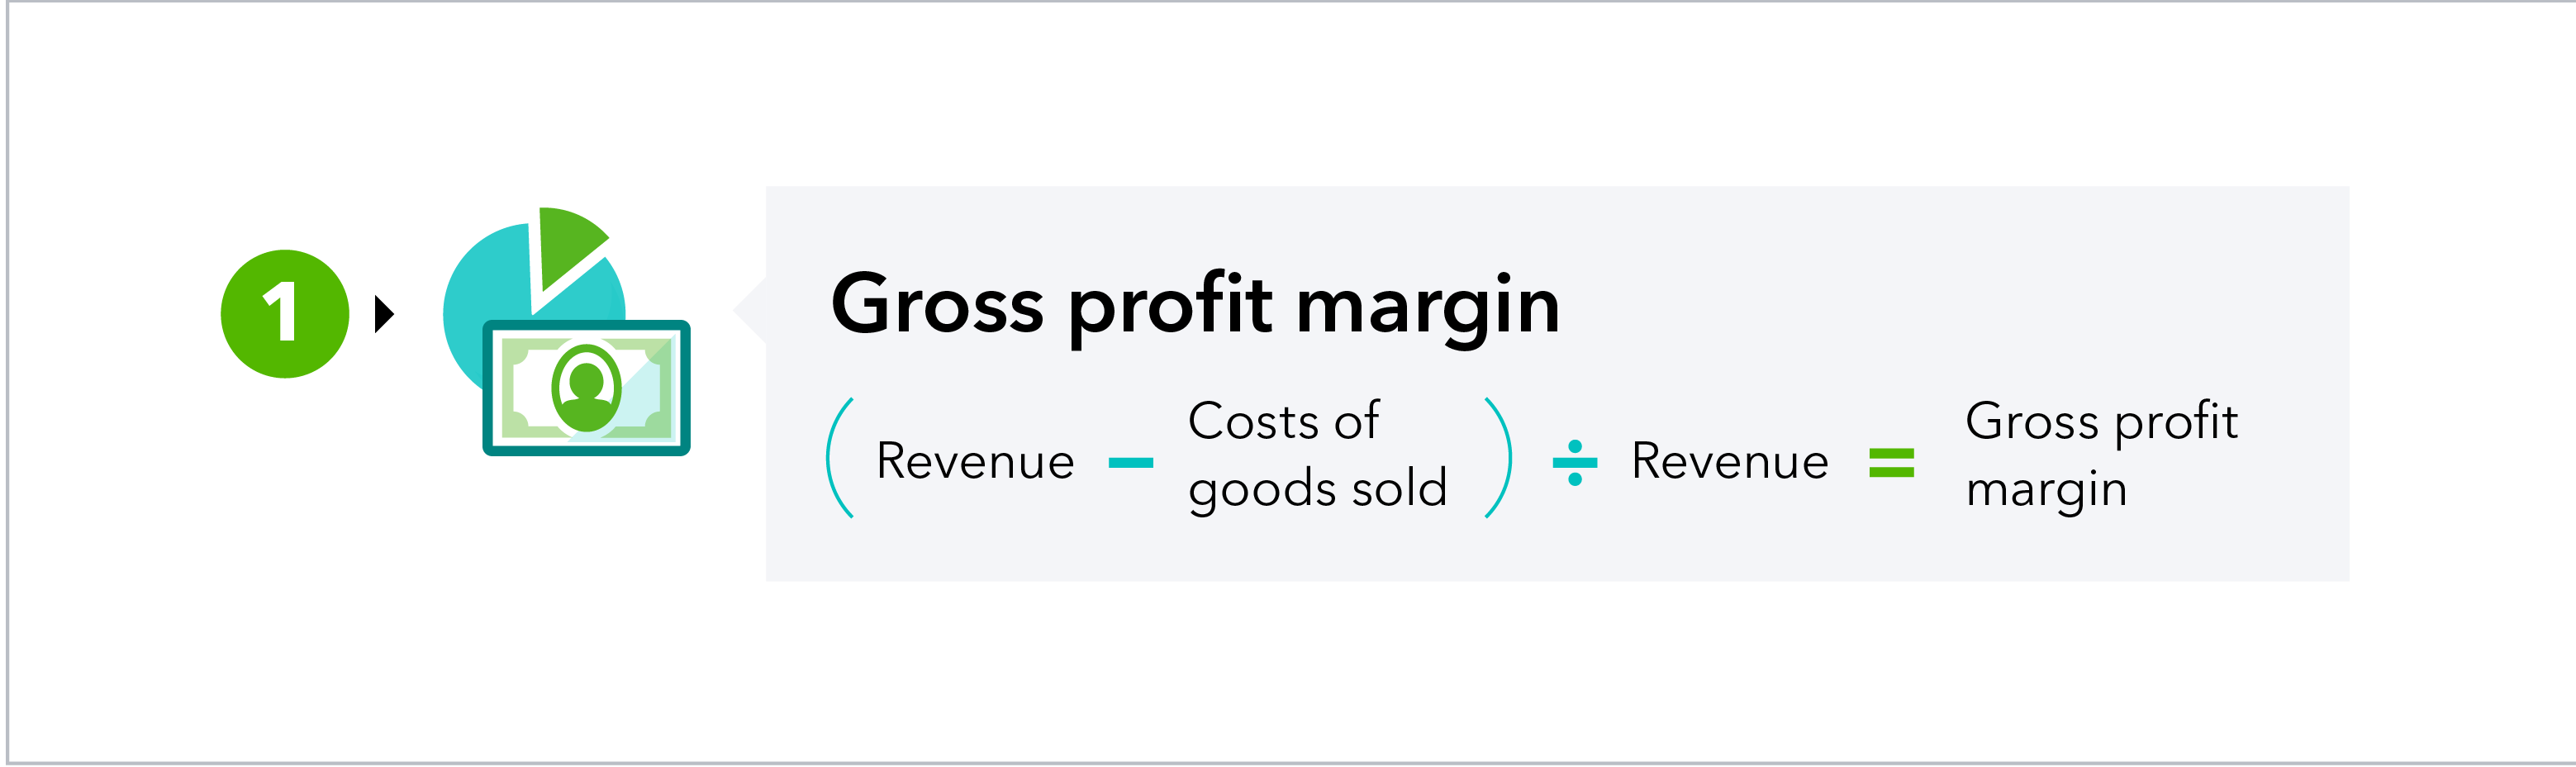 KPIs for small business: gross profit margin